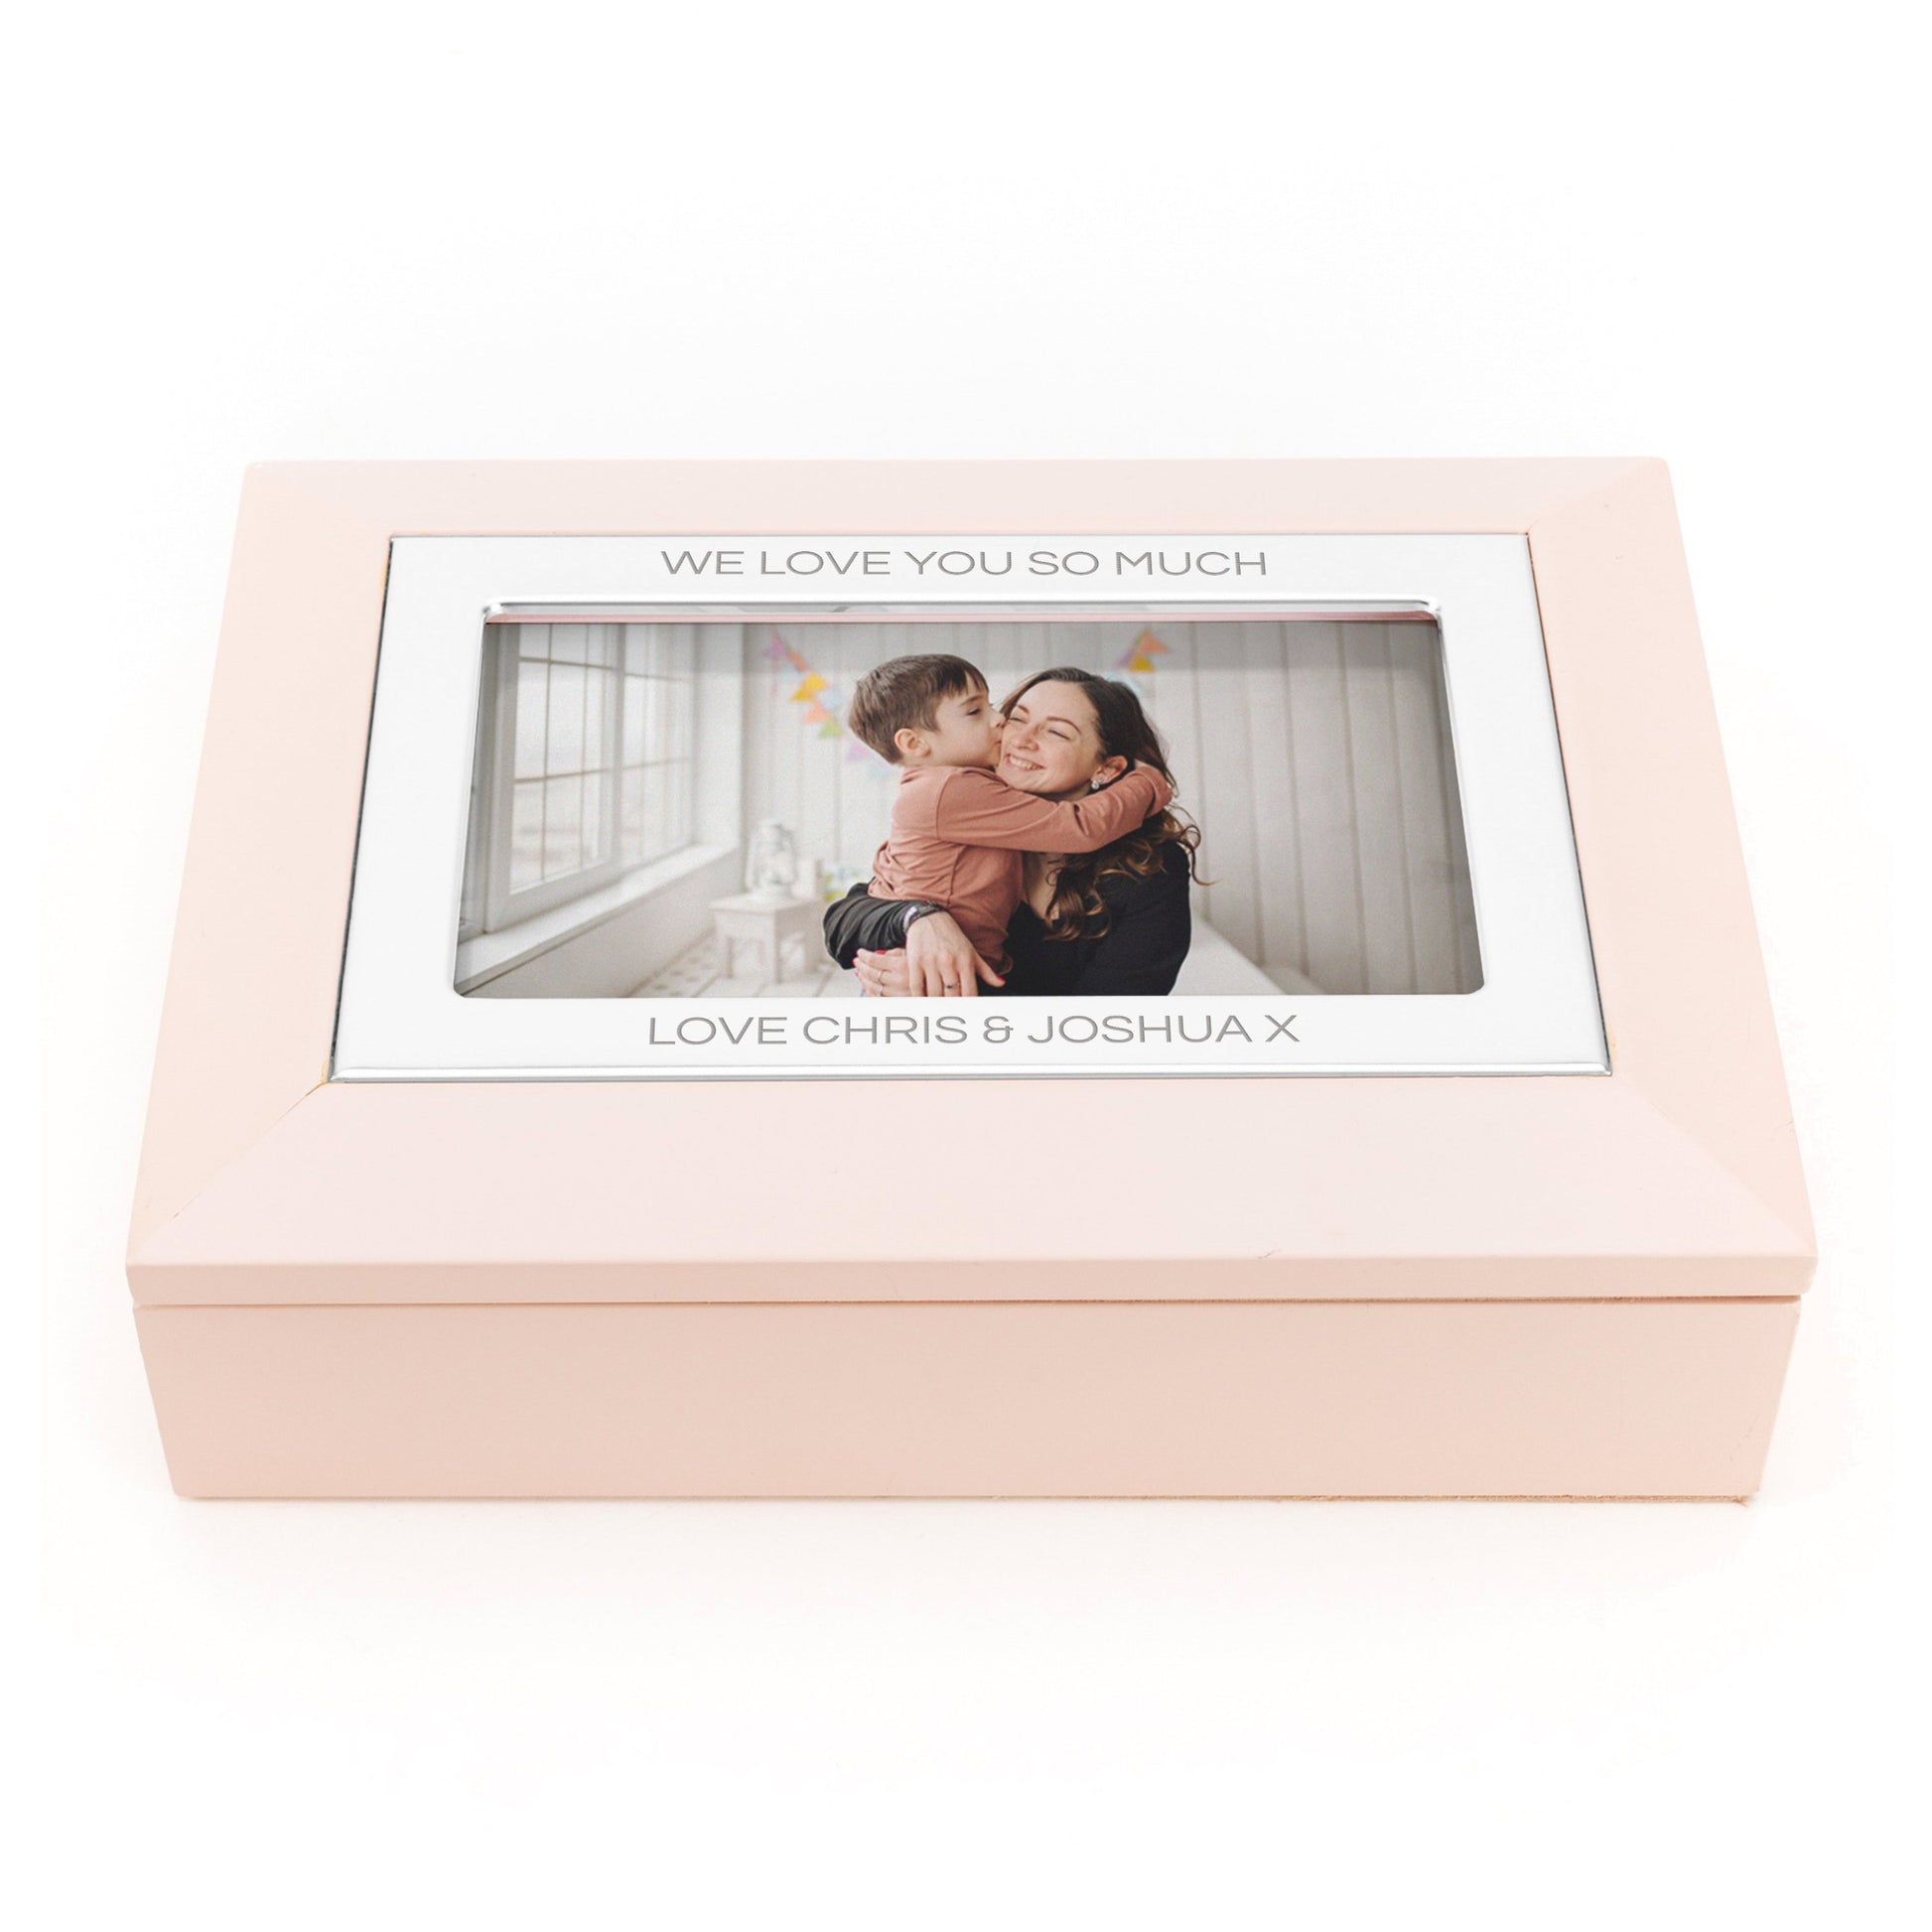 Personalized Jewellery Boxes & Storage - Personalized Blush Pink & Silver Photo Jewellery Box 